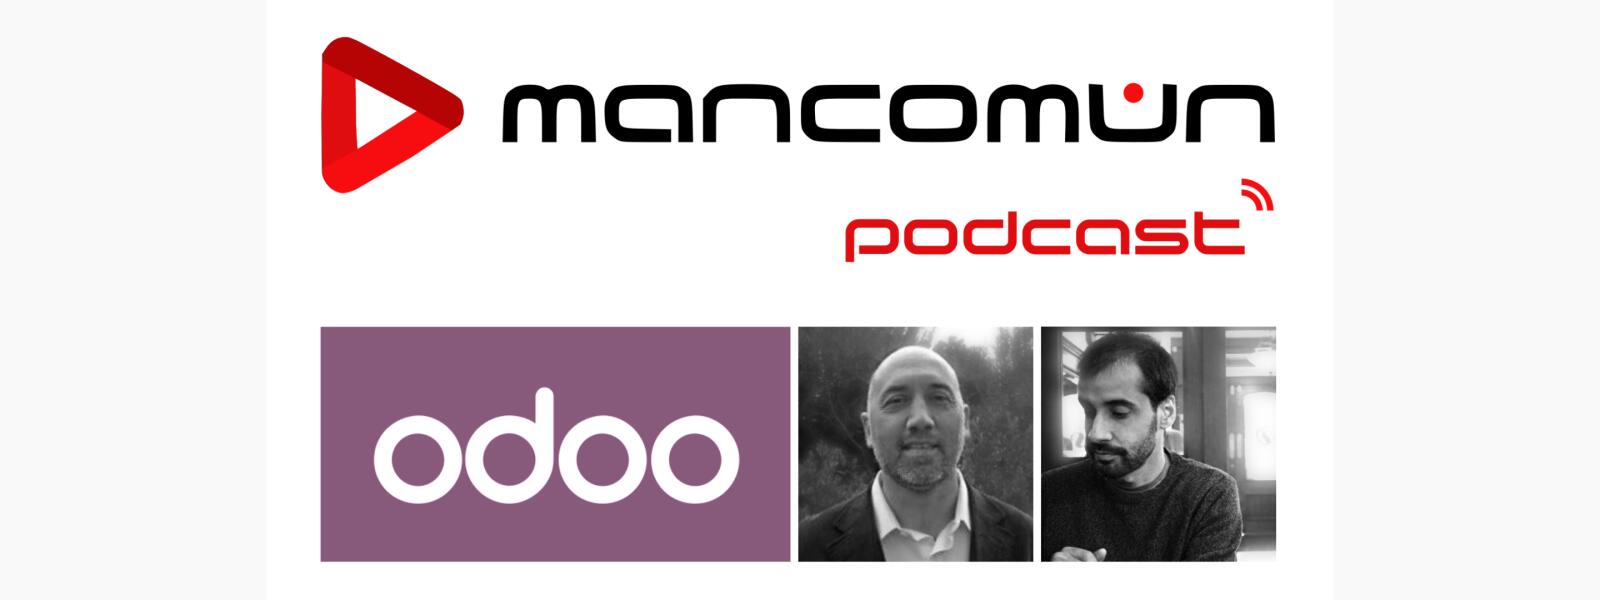 Mancomún Podcast: 74 – Que supuxo para a empresa o software libre, con Wilfredo Santana e Javier Giráldez